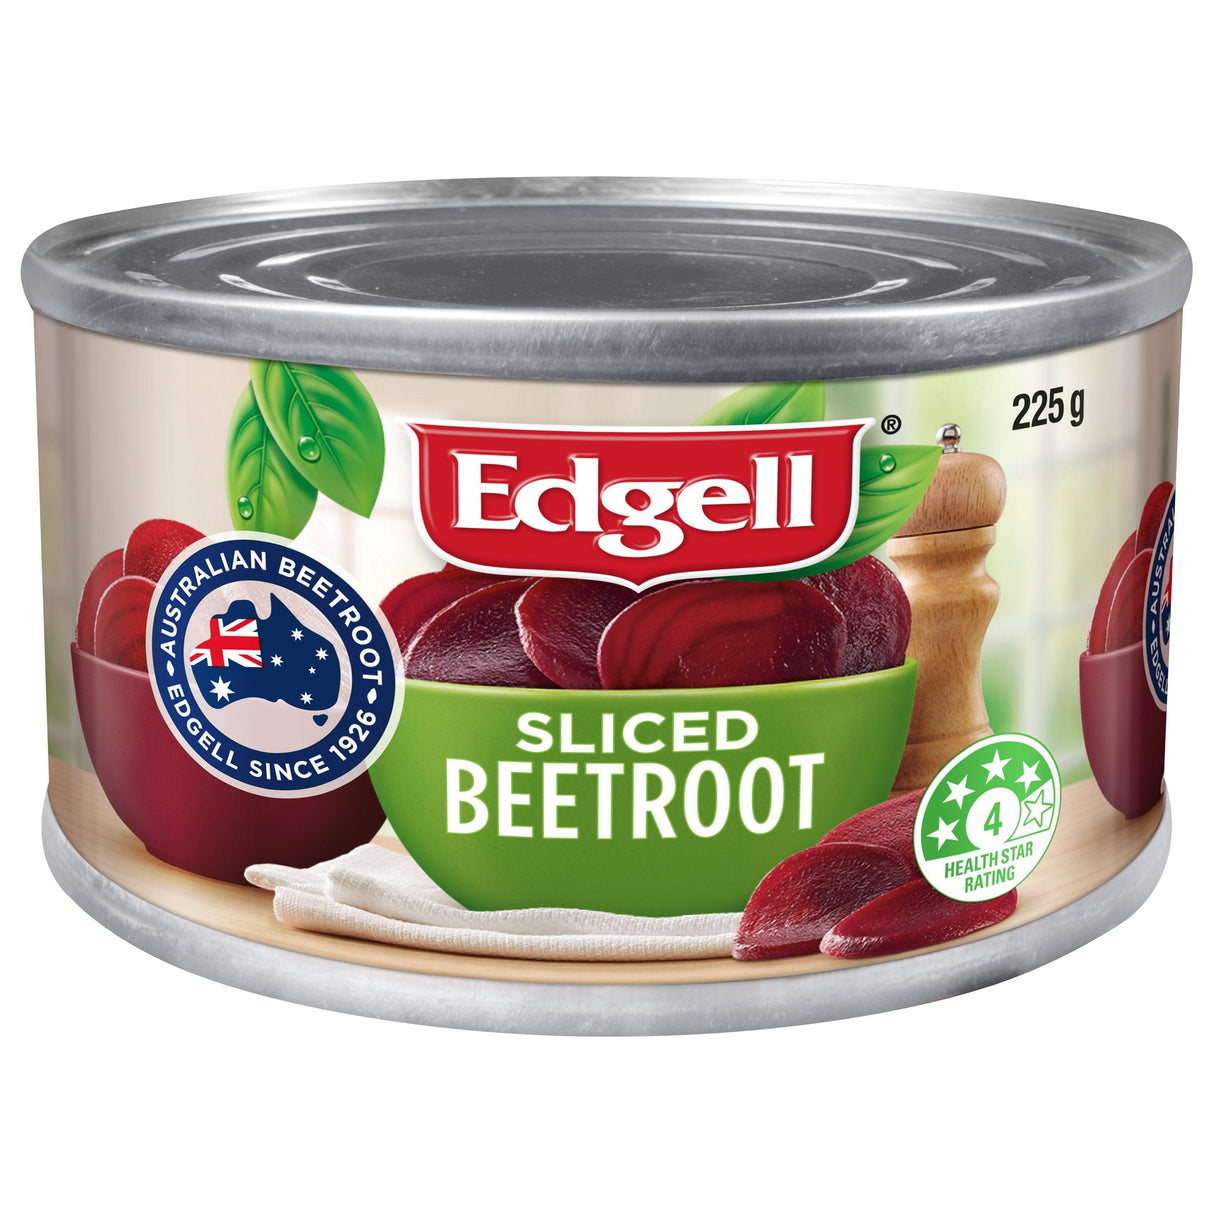 Edgell Beetroot Sliced 225g